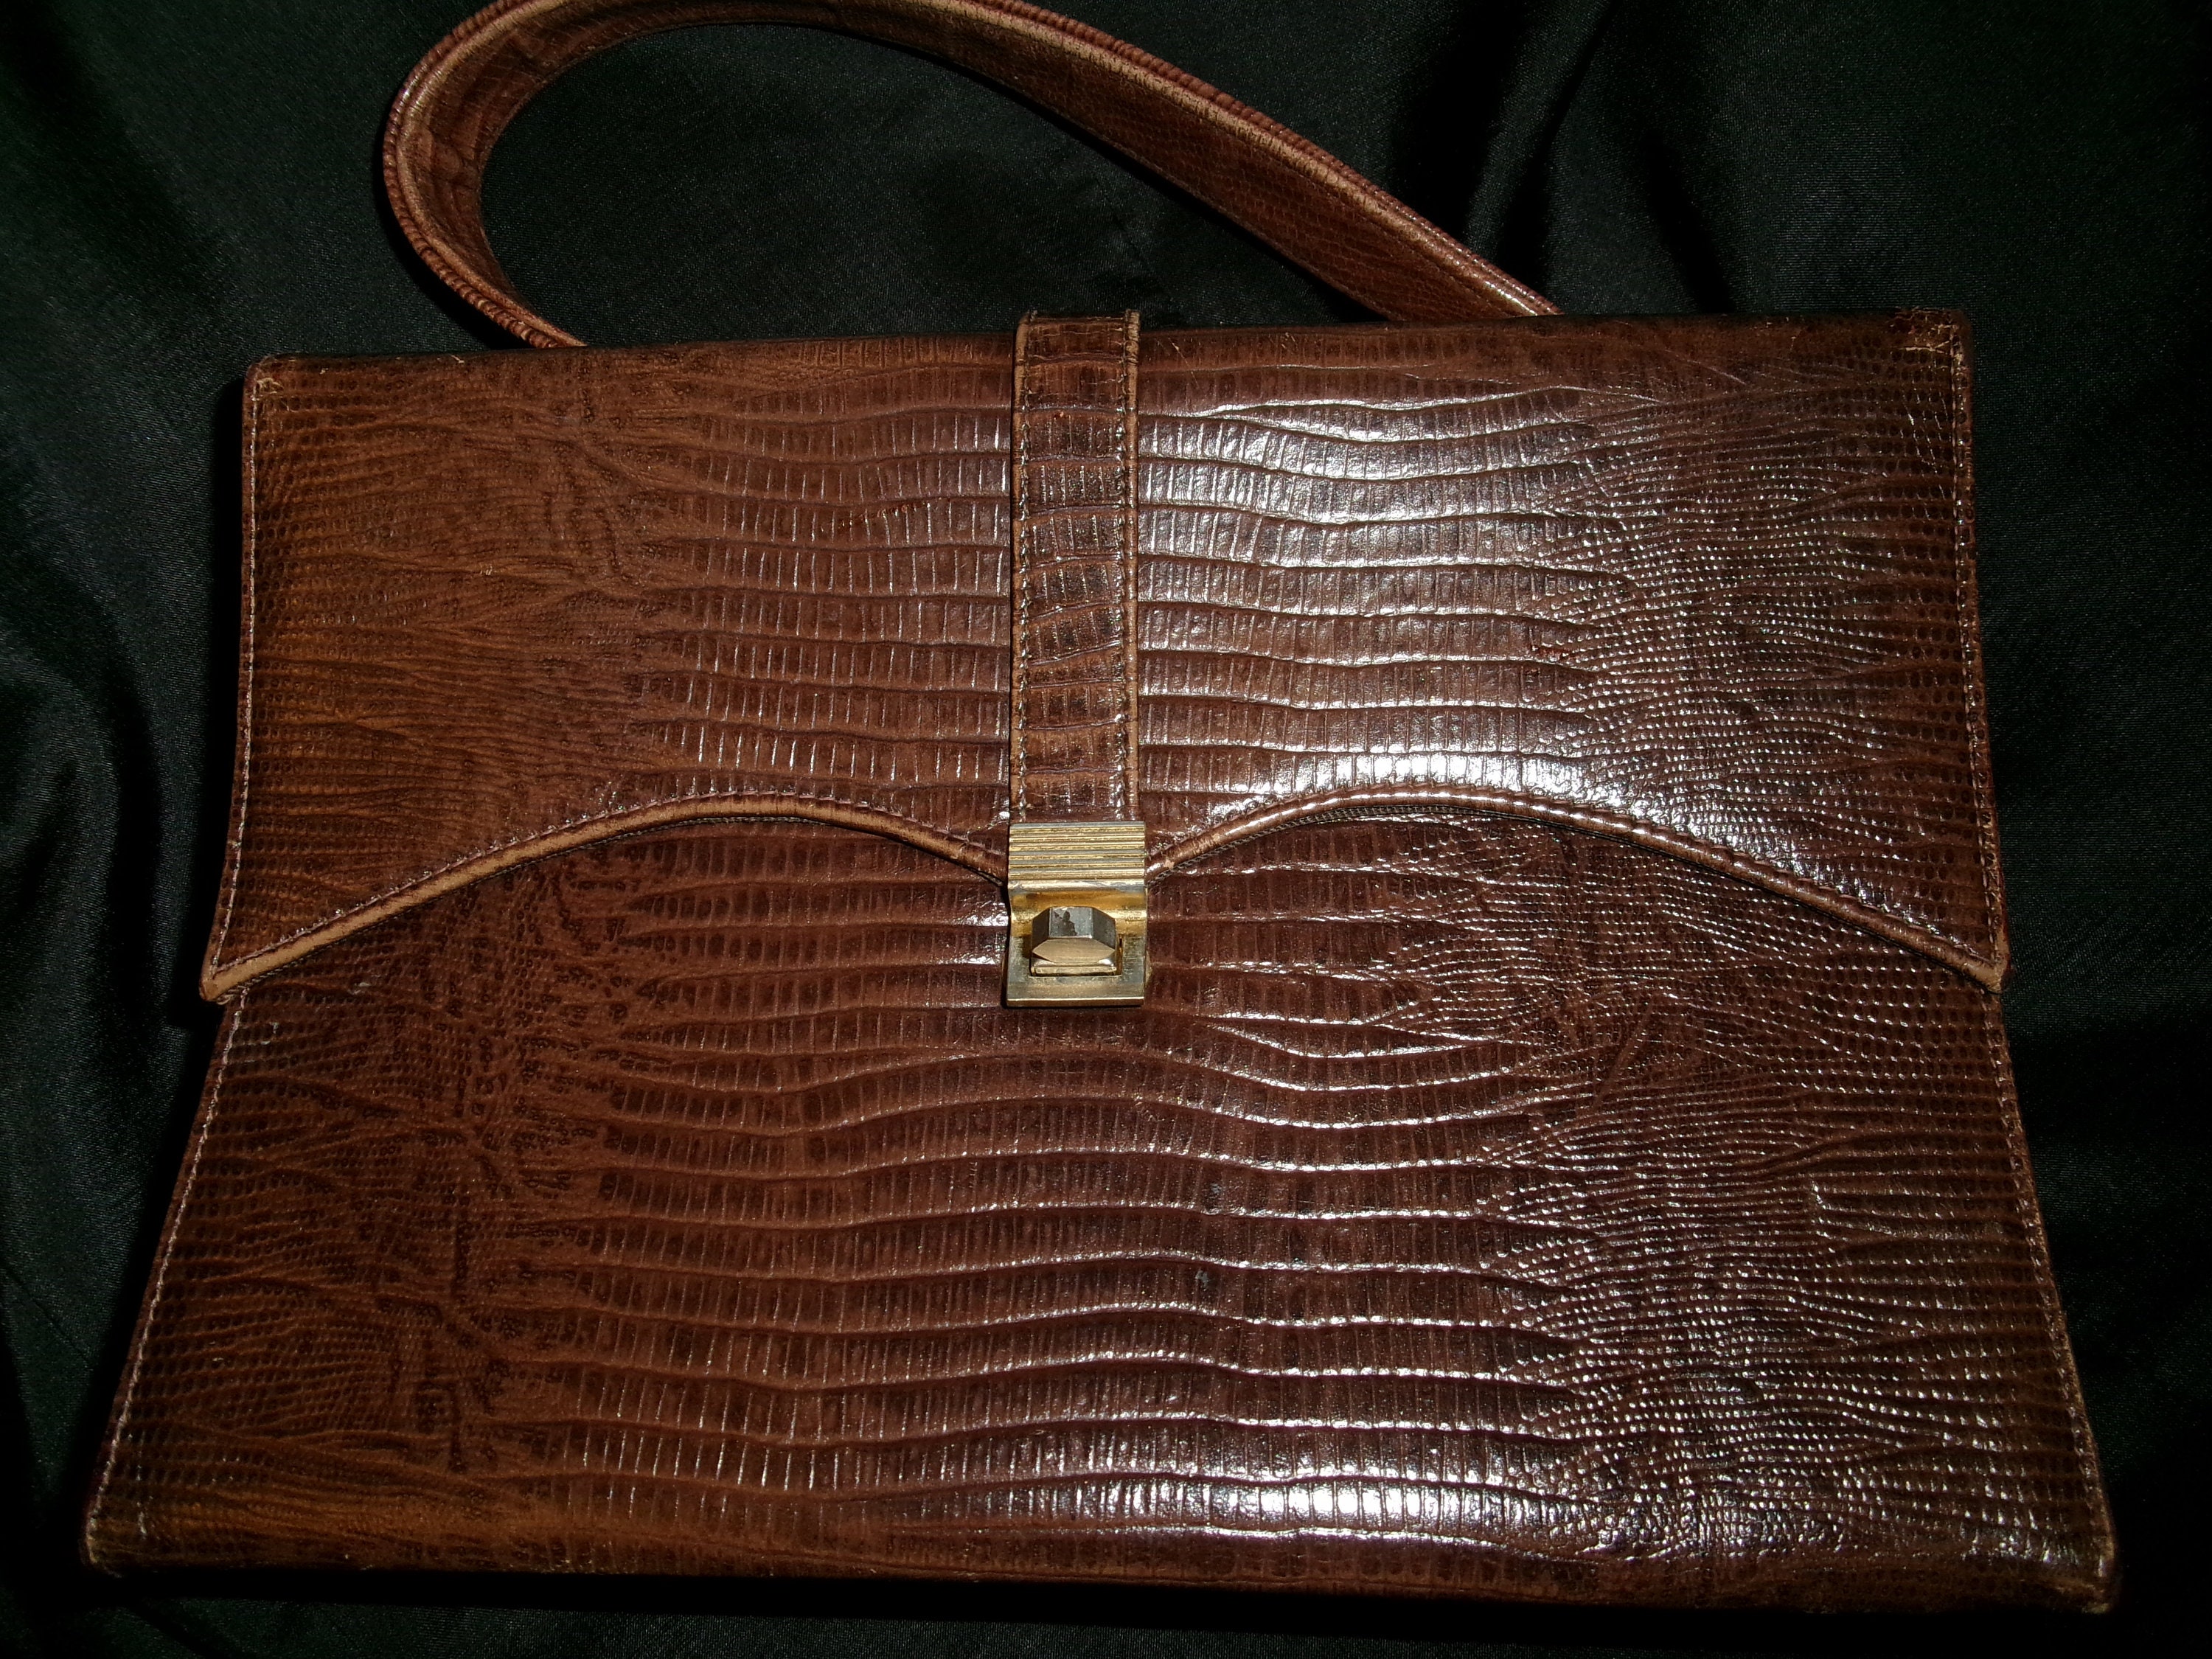 15 x 11 HUGE SCALED Cognac Brown ALLIGATOR Belly Skin BIRKIN Bag